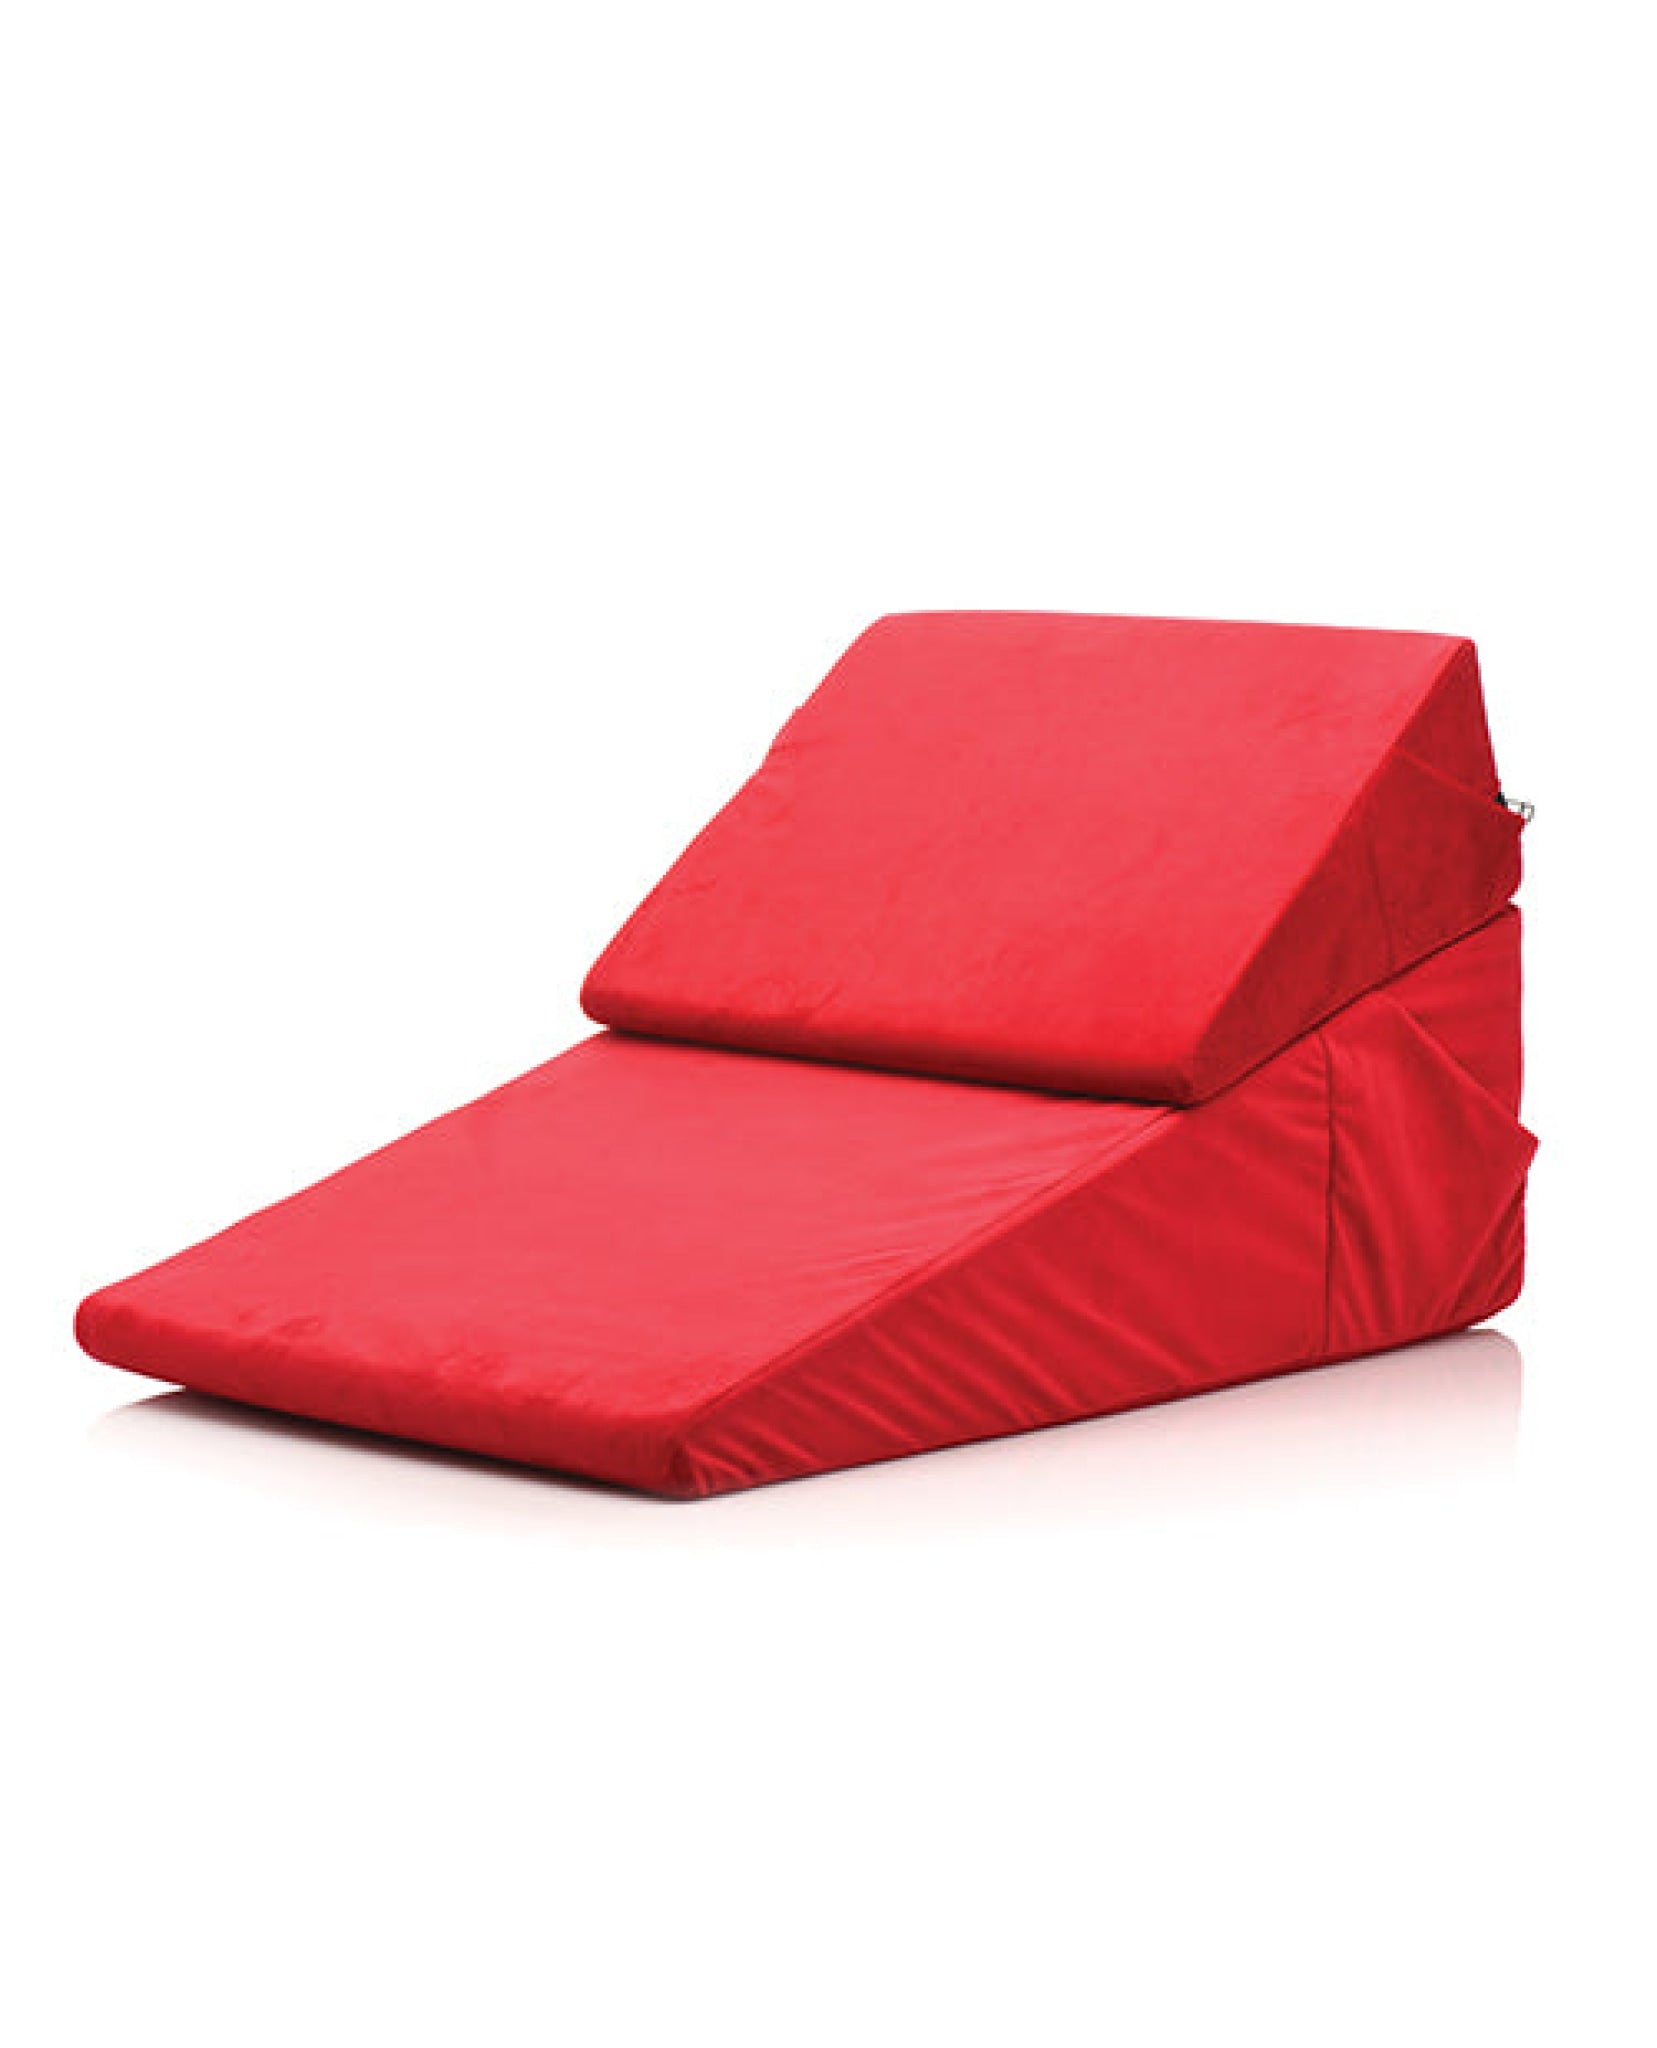 Bedroom Bliss Love Cushion Set - Red Bedroom Bliss